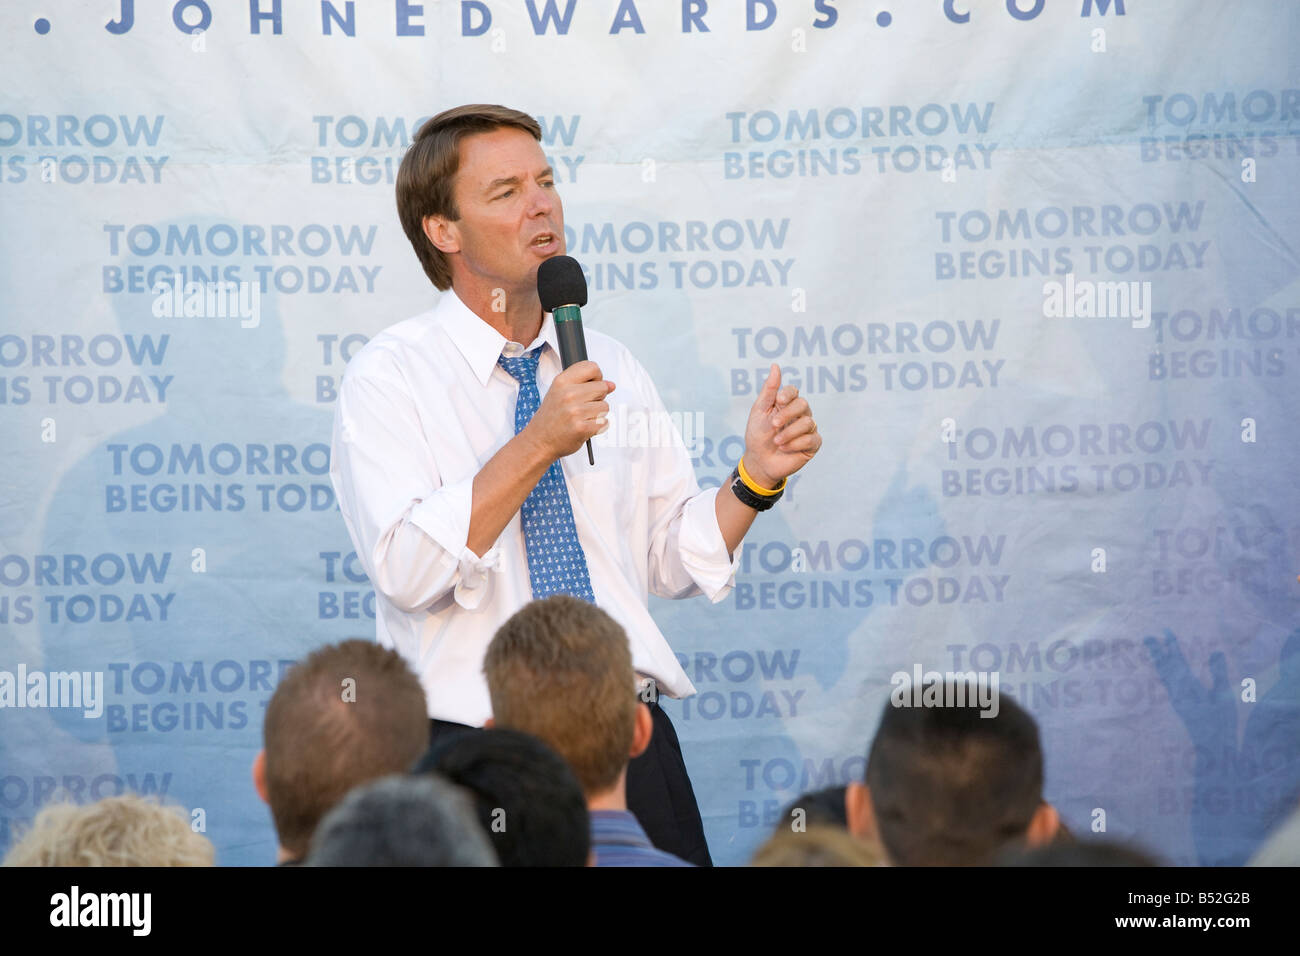 WEST HOLLYWOOD CA 9 Agosto il candidato presidenziale John Edwards parlando a una raccolta fondi evento in West Hollywood Los Angeles CA Foto Stock